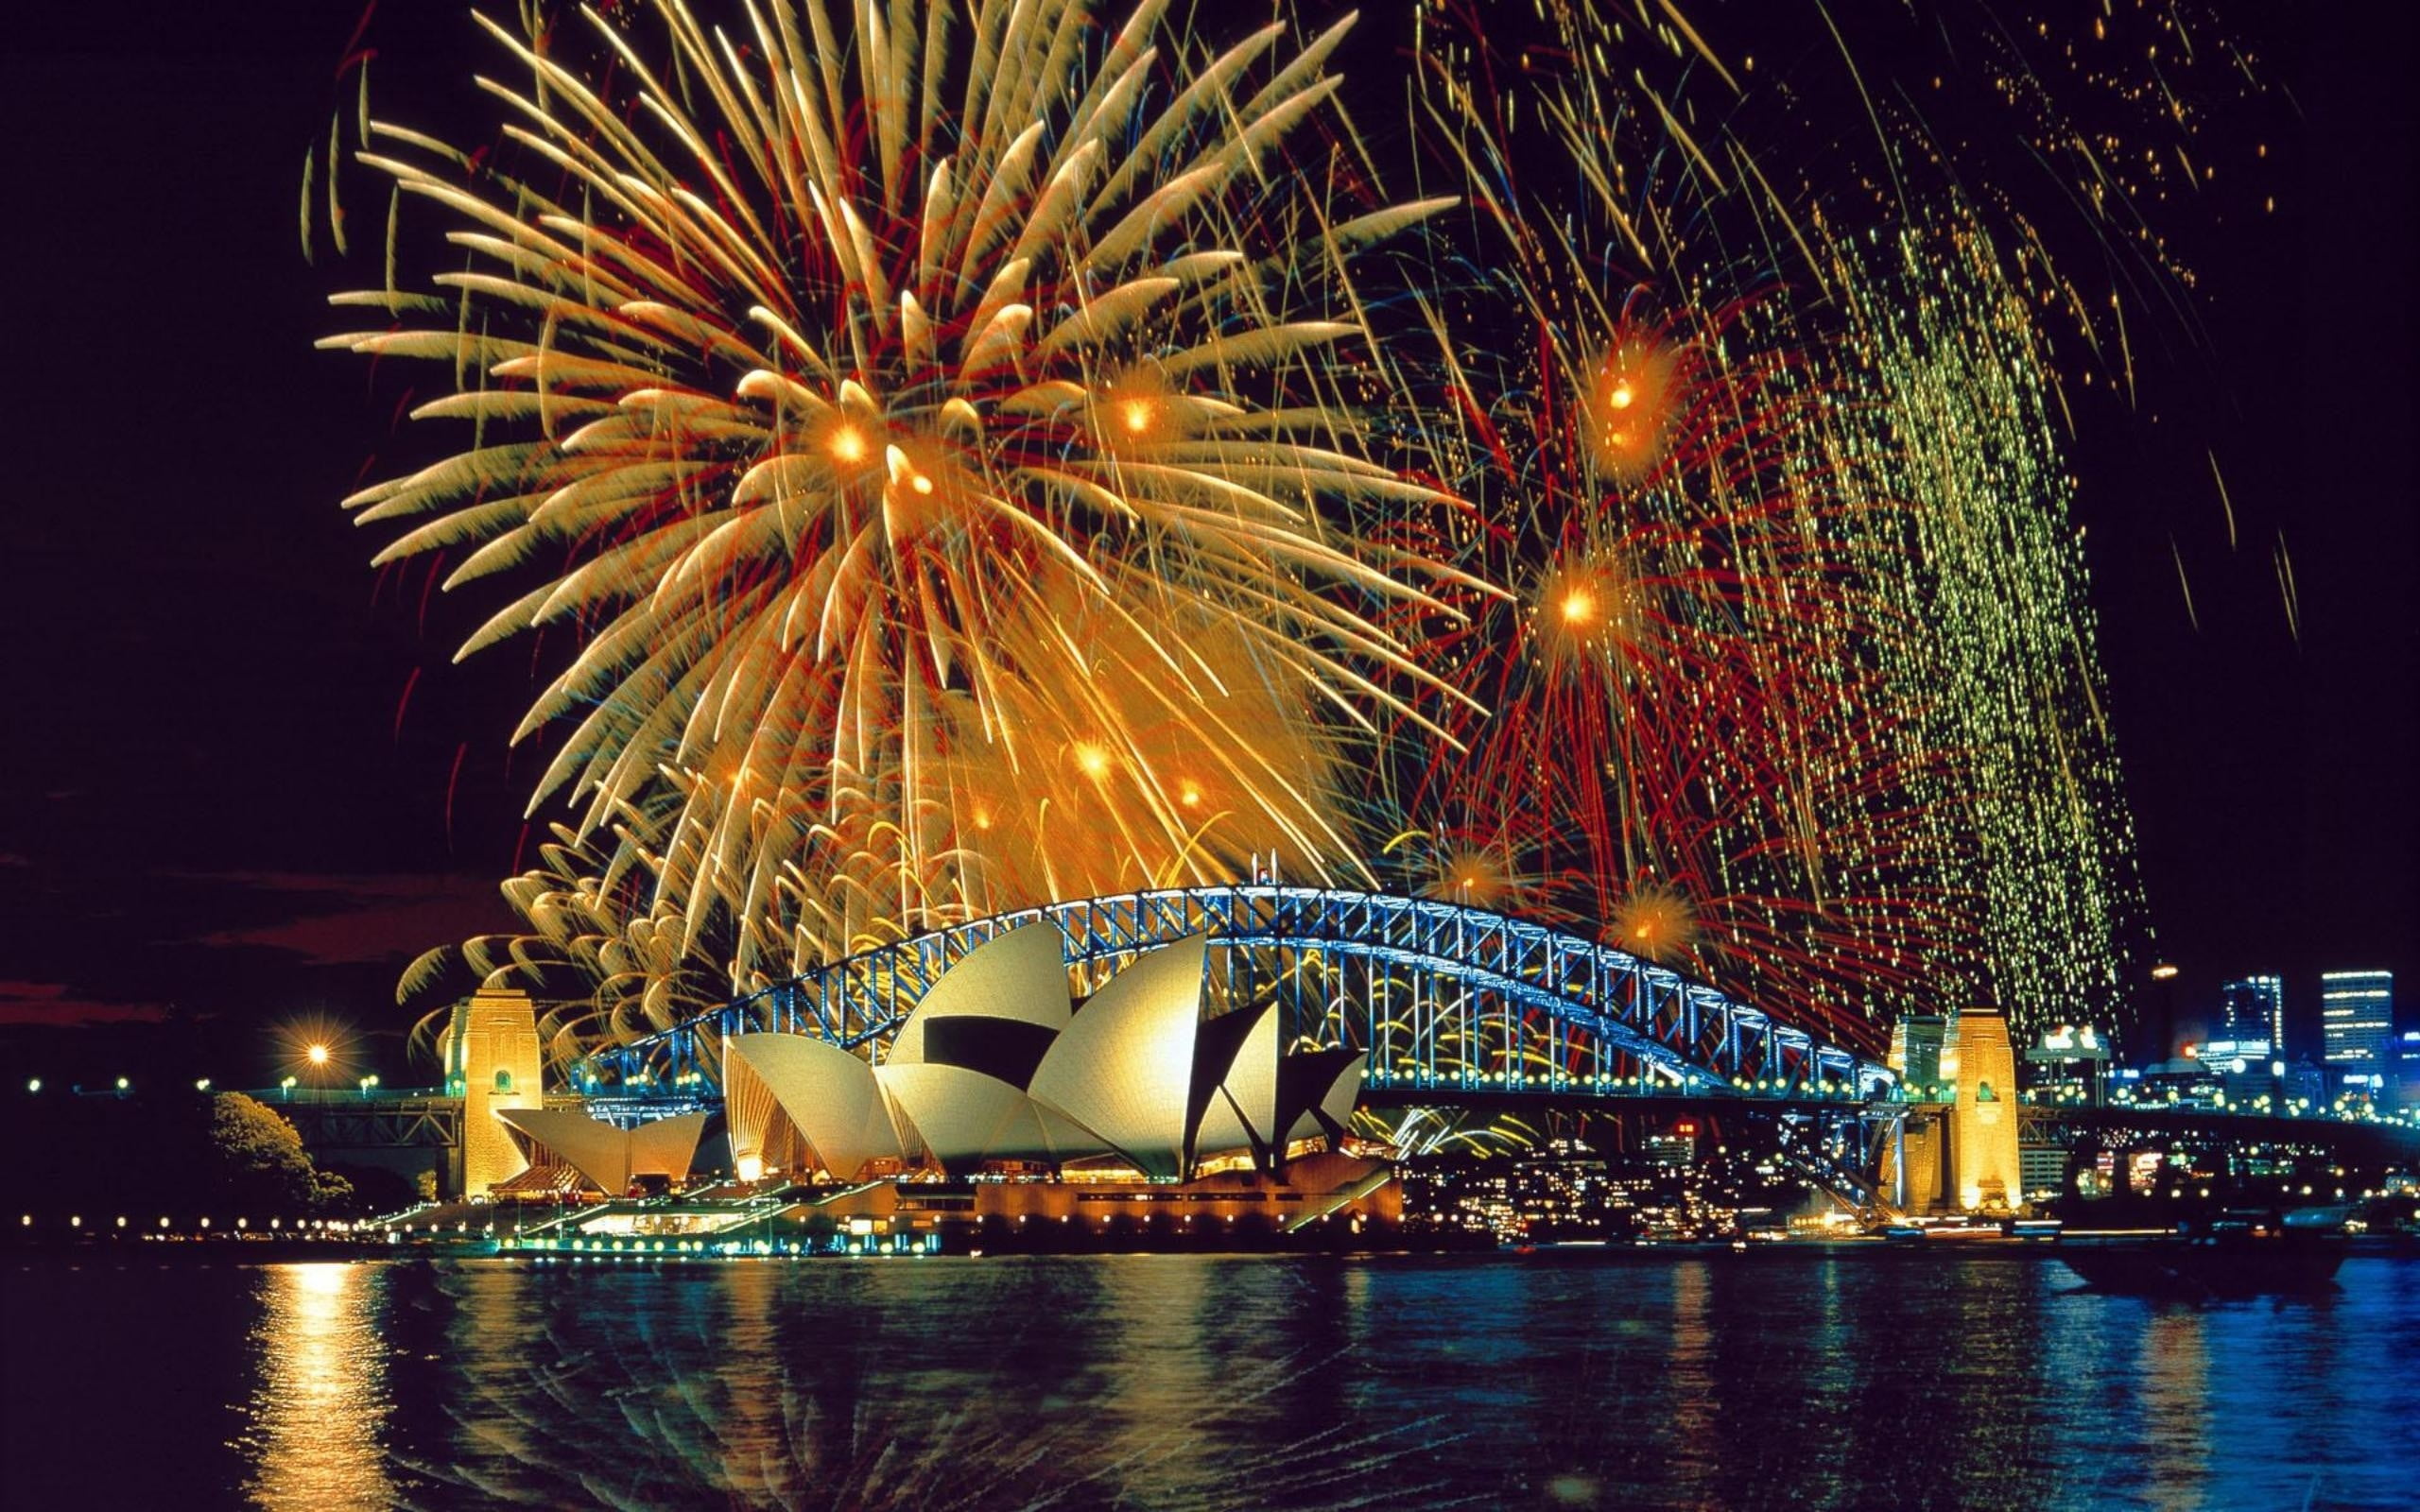 Fireworks display near Sydney Opera House during nighttime